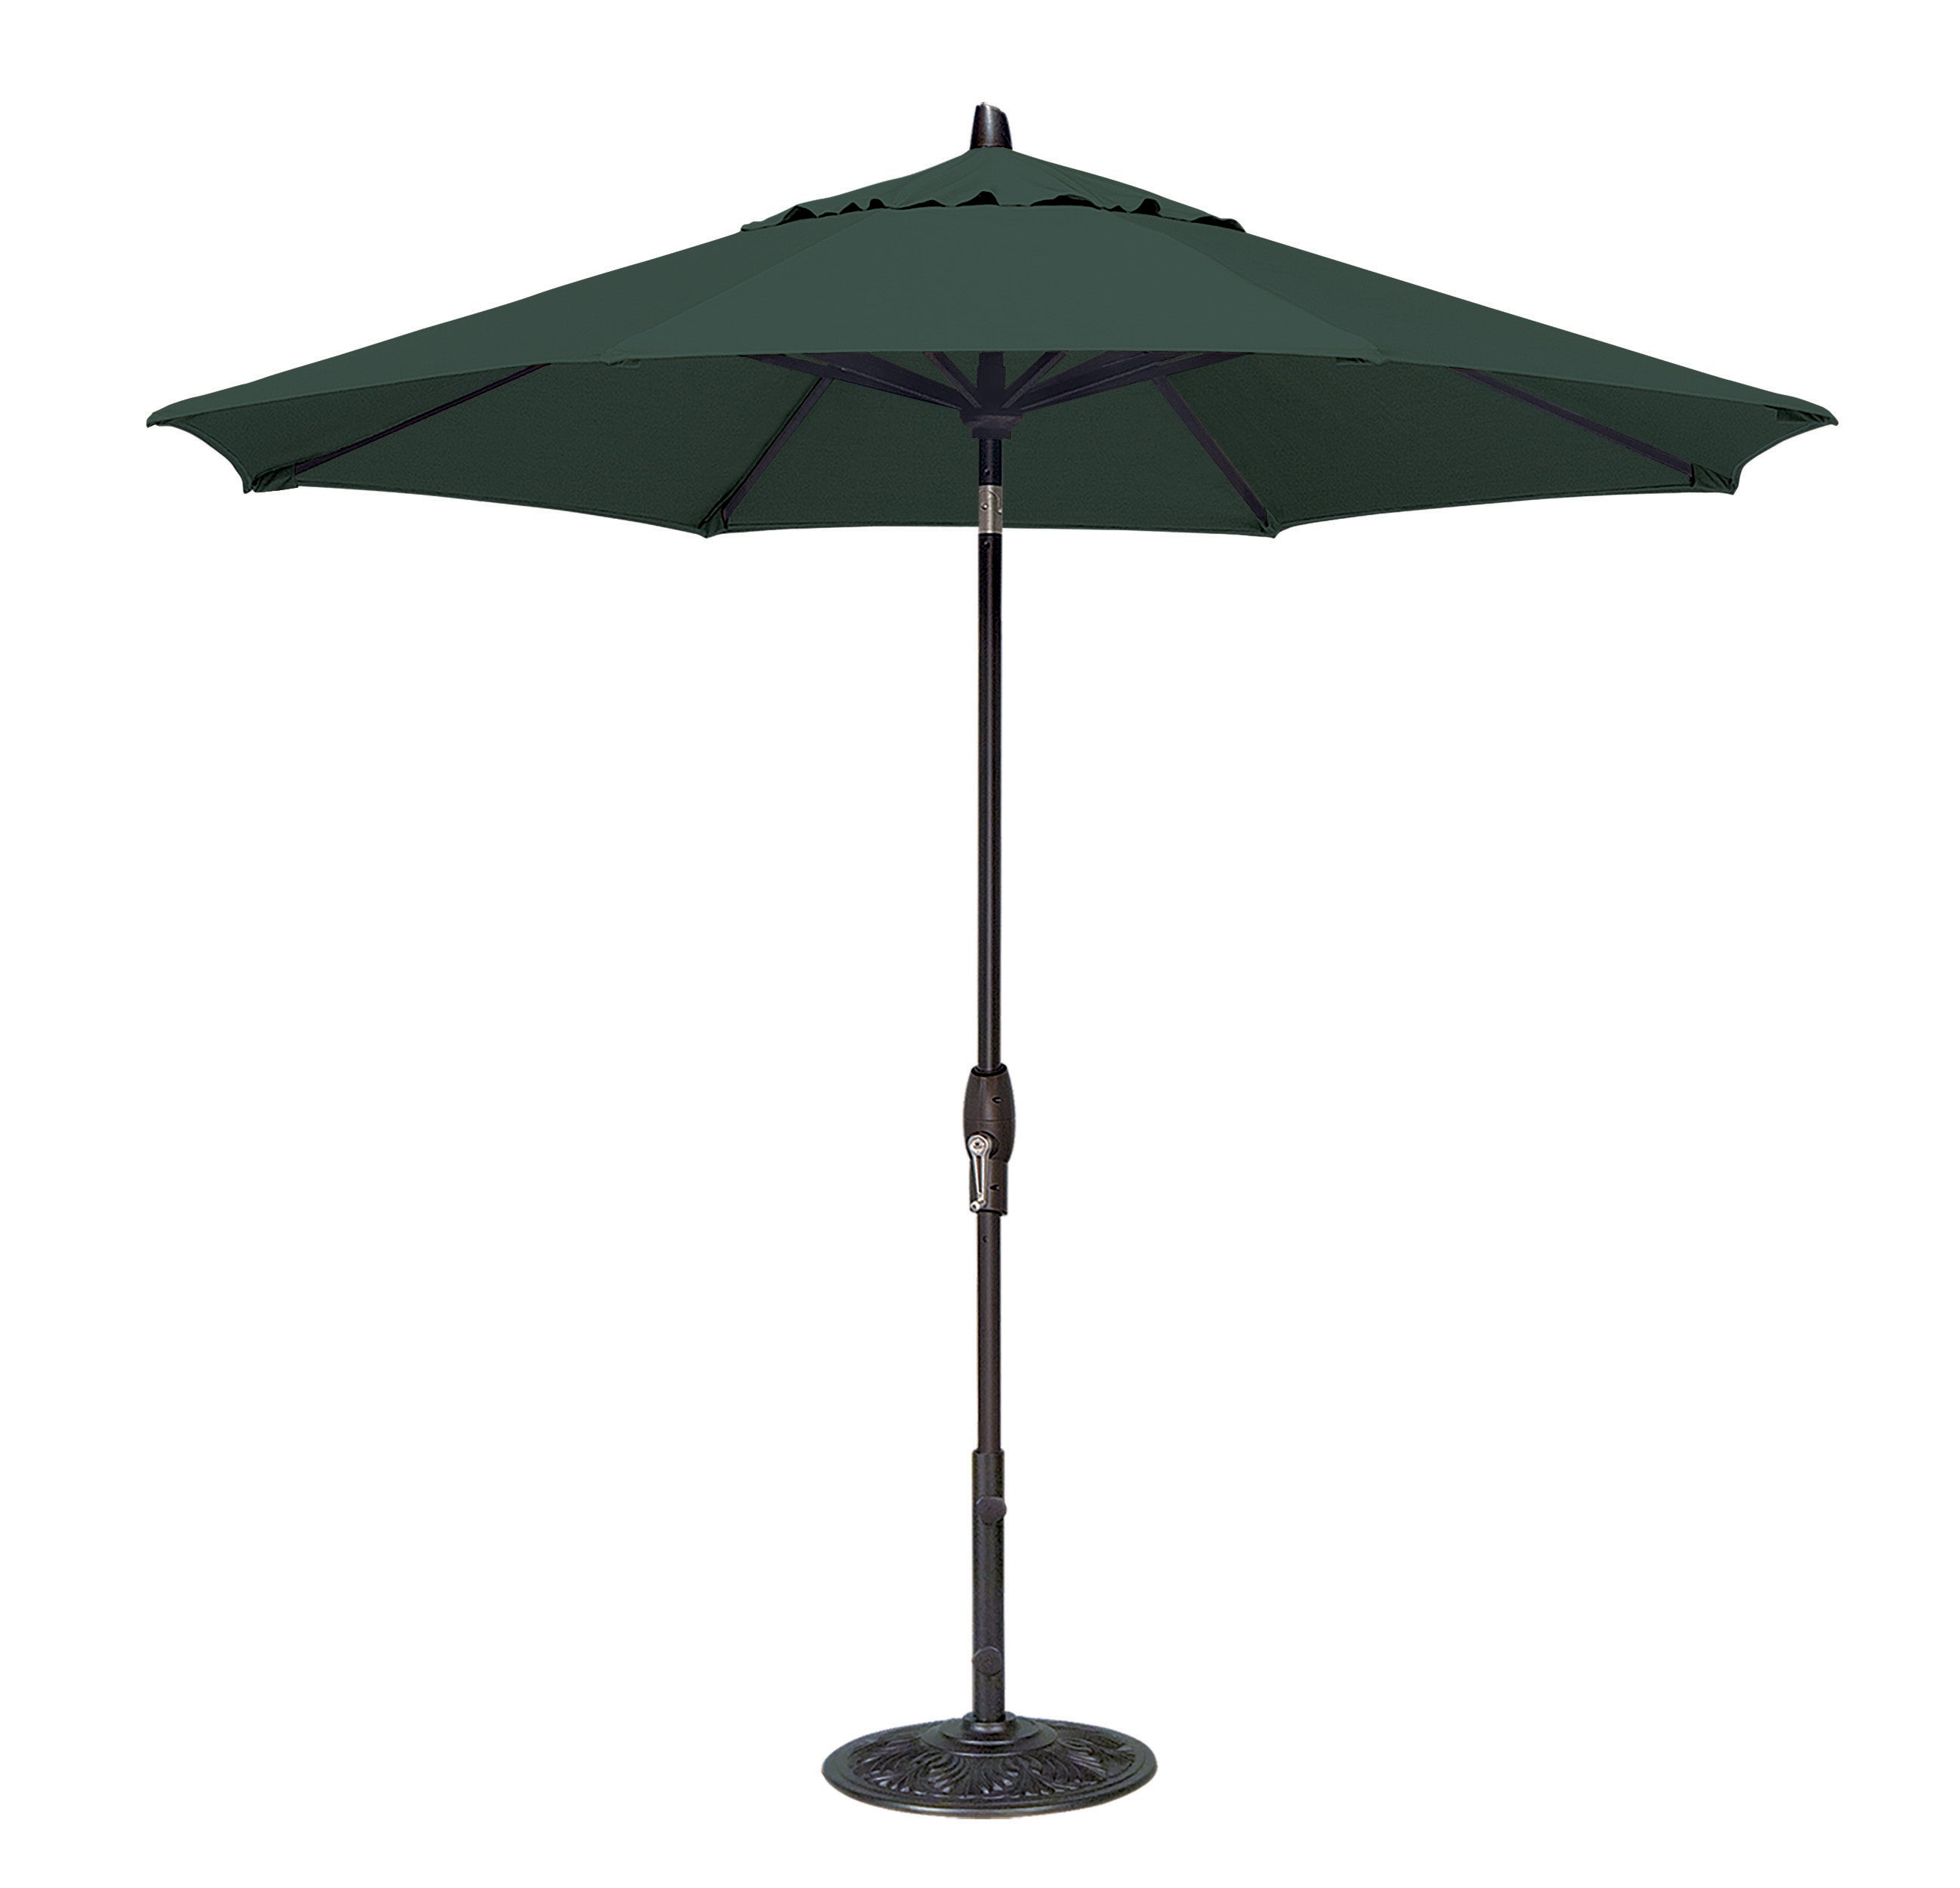 Forest Green umbrella variant